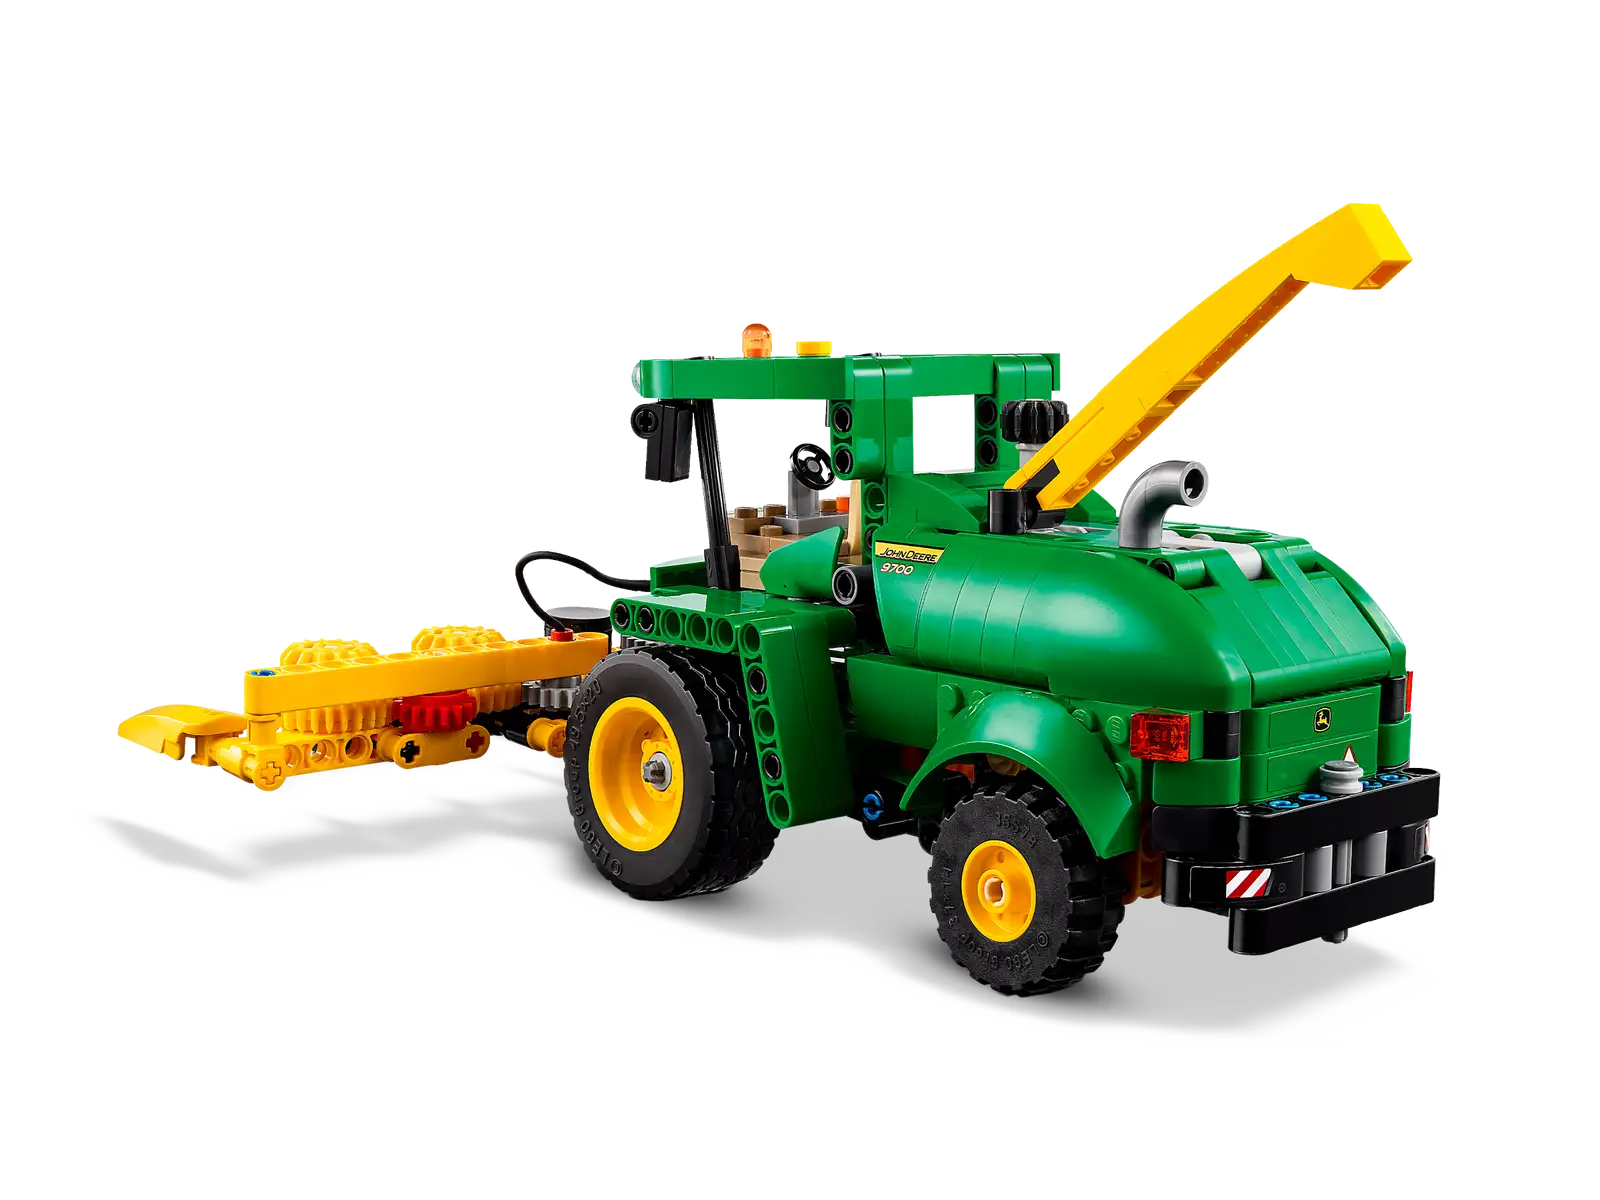 42168 John Deere 9700 Forage Harvester